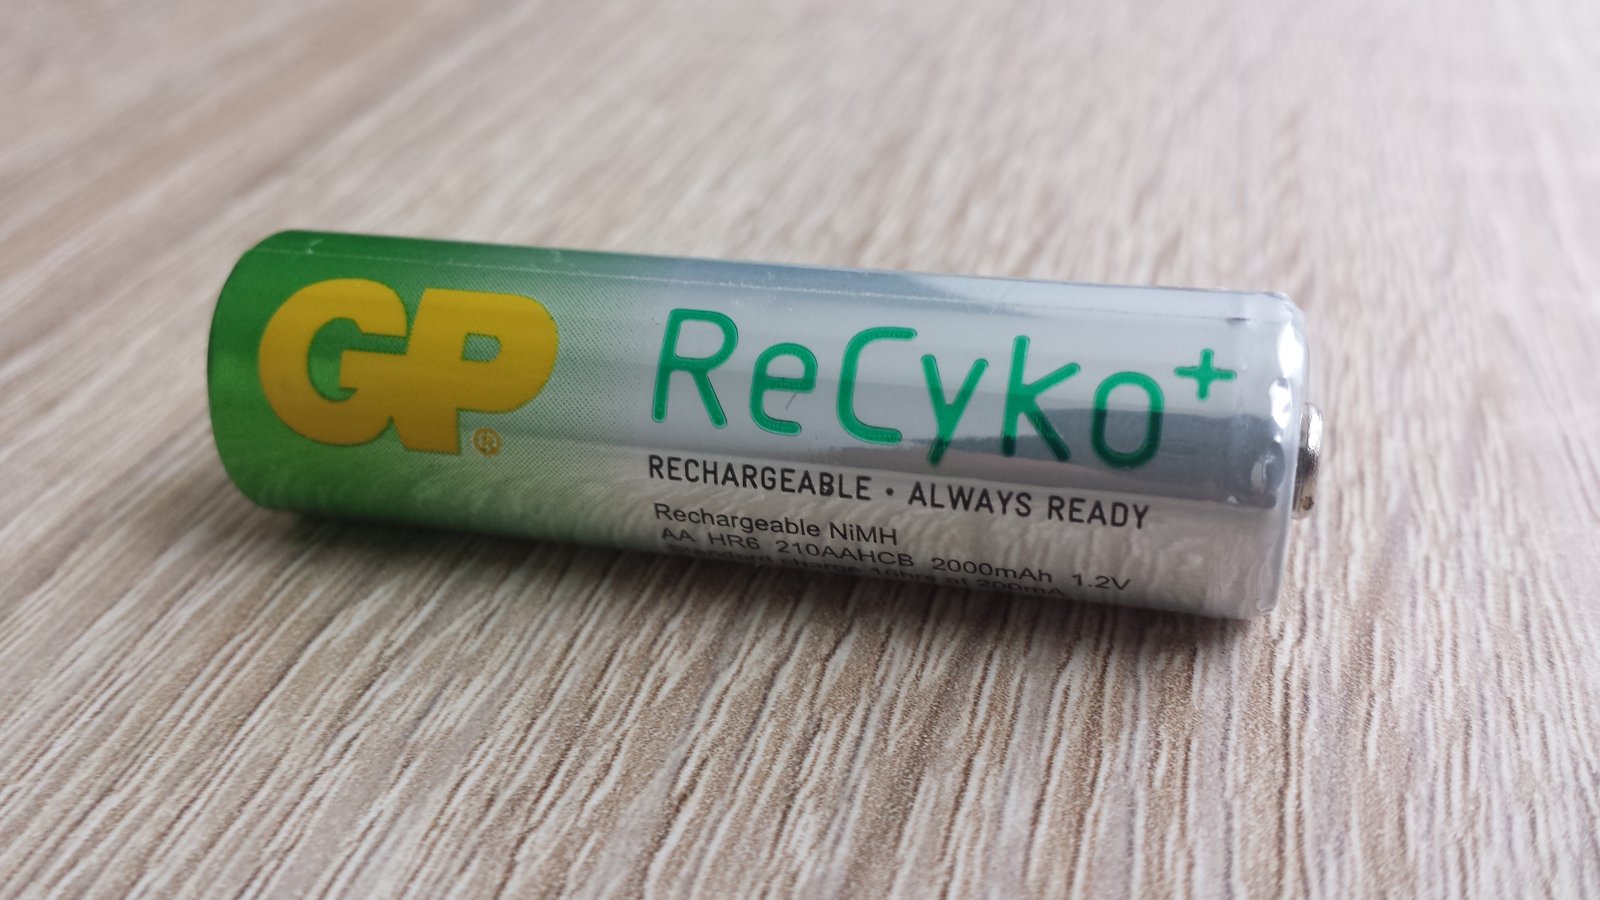 GP ReCyko+